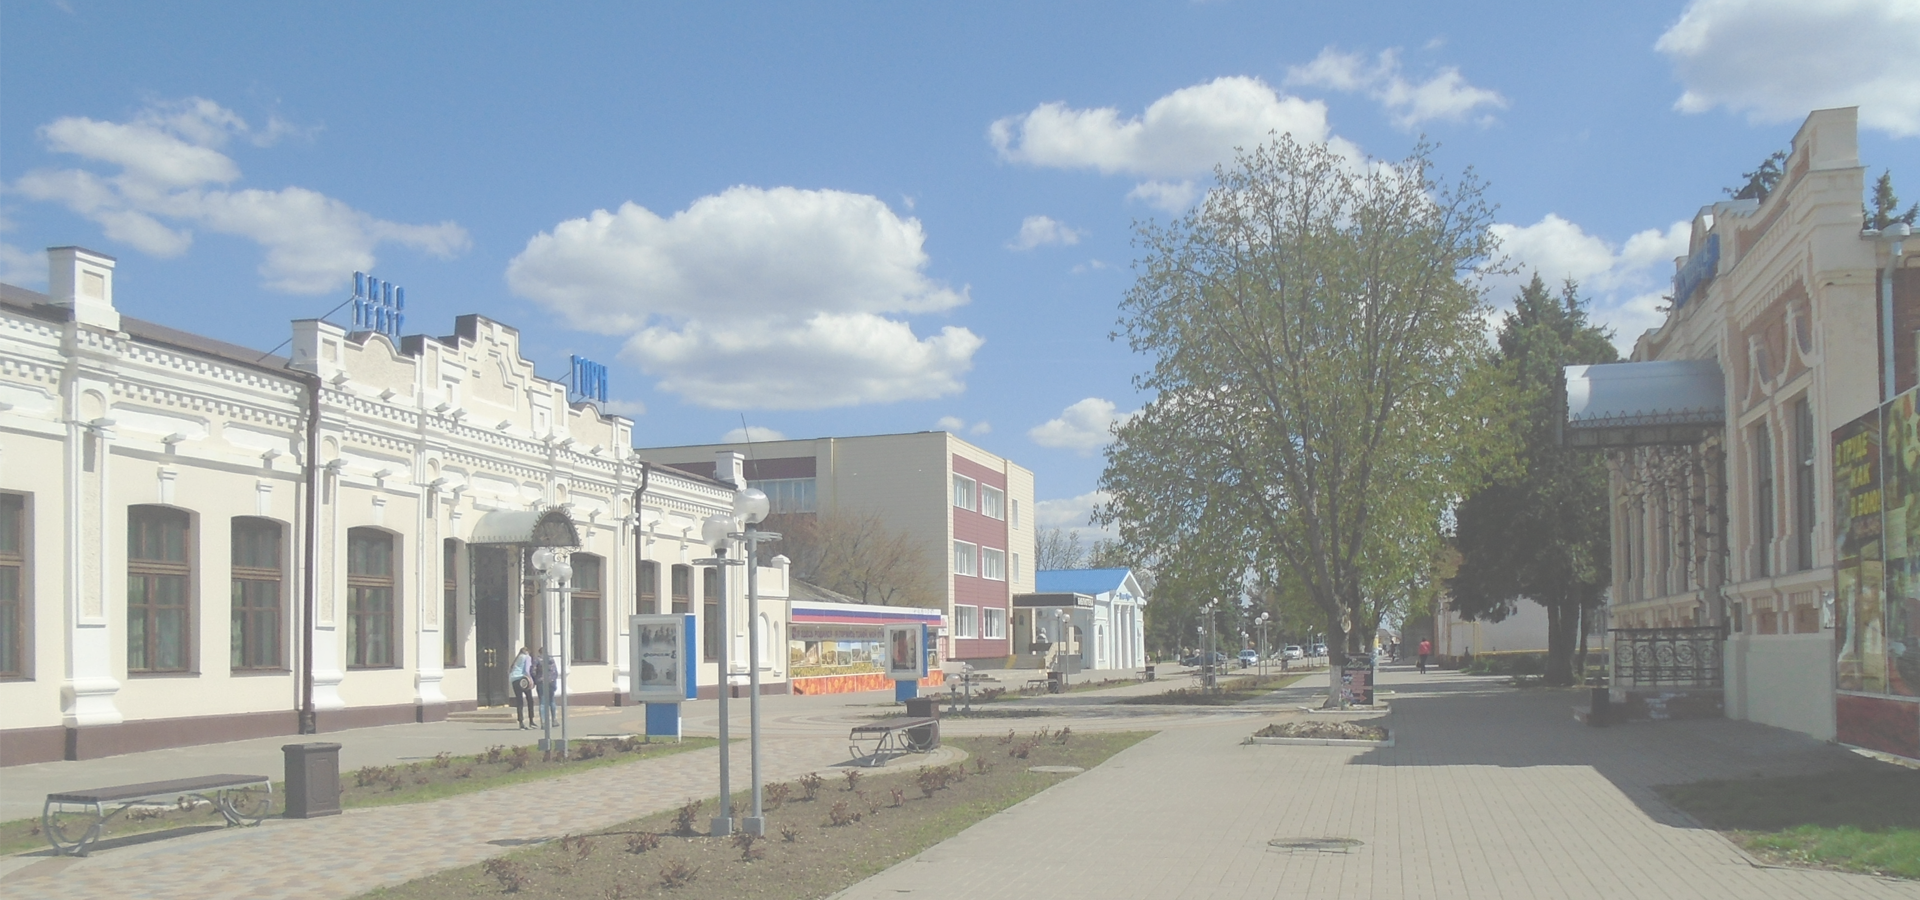 <b>Leningradskaya, Krasnodar Krai, Southern Federal District, Russia</b>